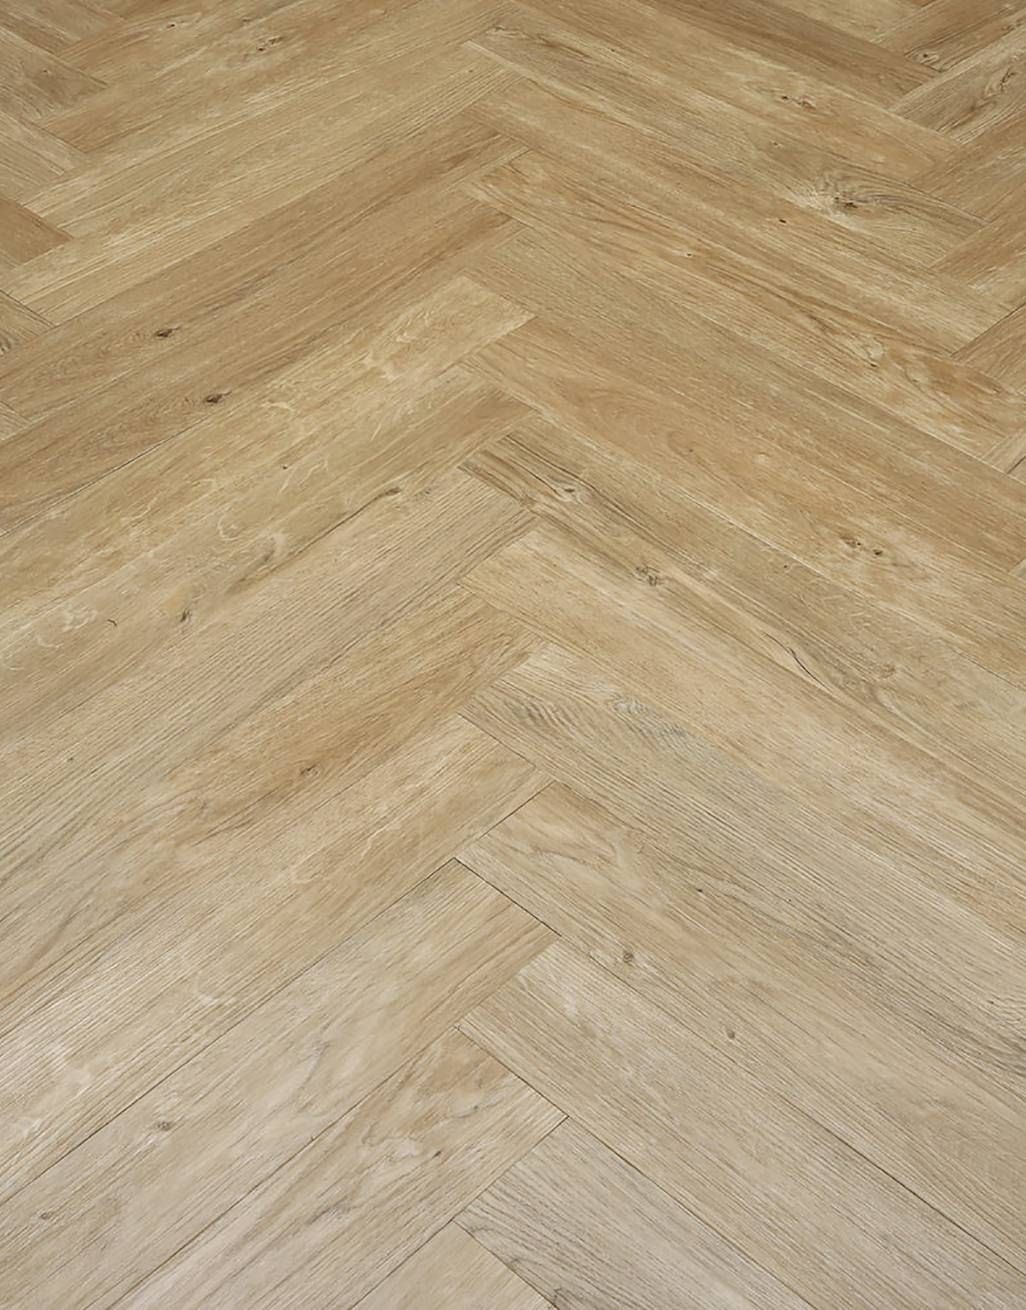 Herringbone Natural Oak Lvt Flooring, Natural Oak Vinyl Plank Flooring